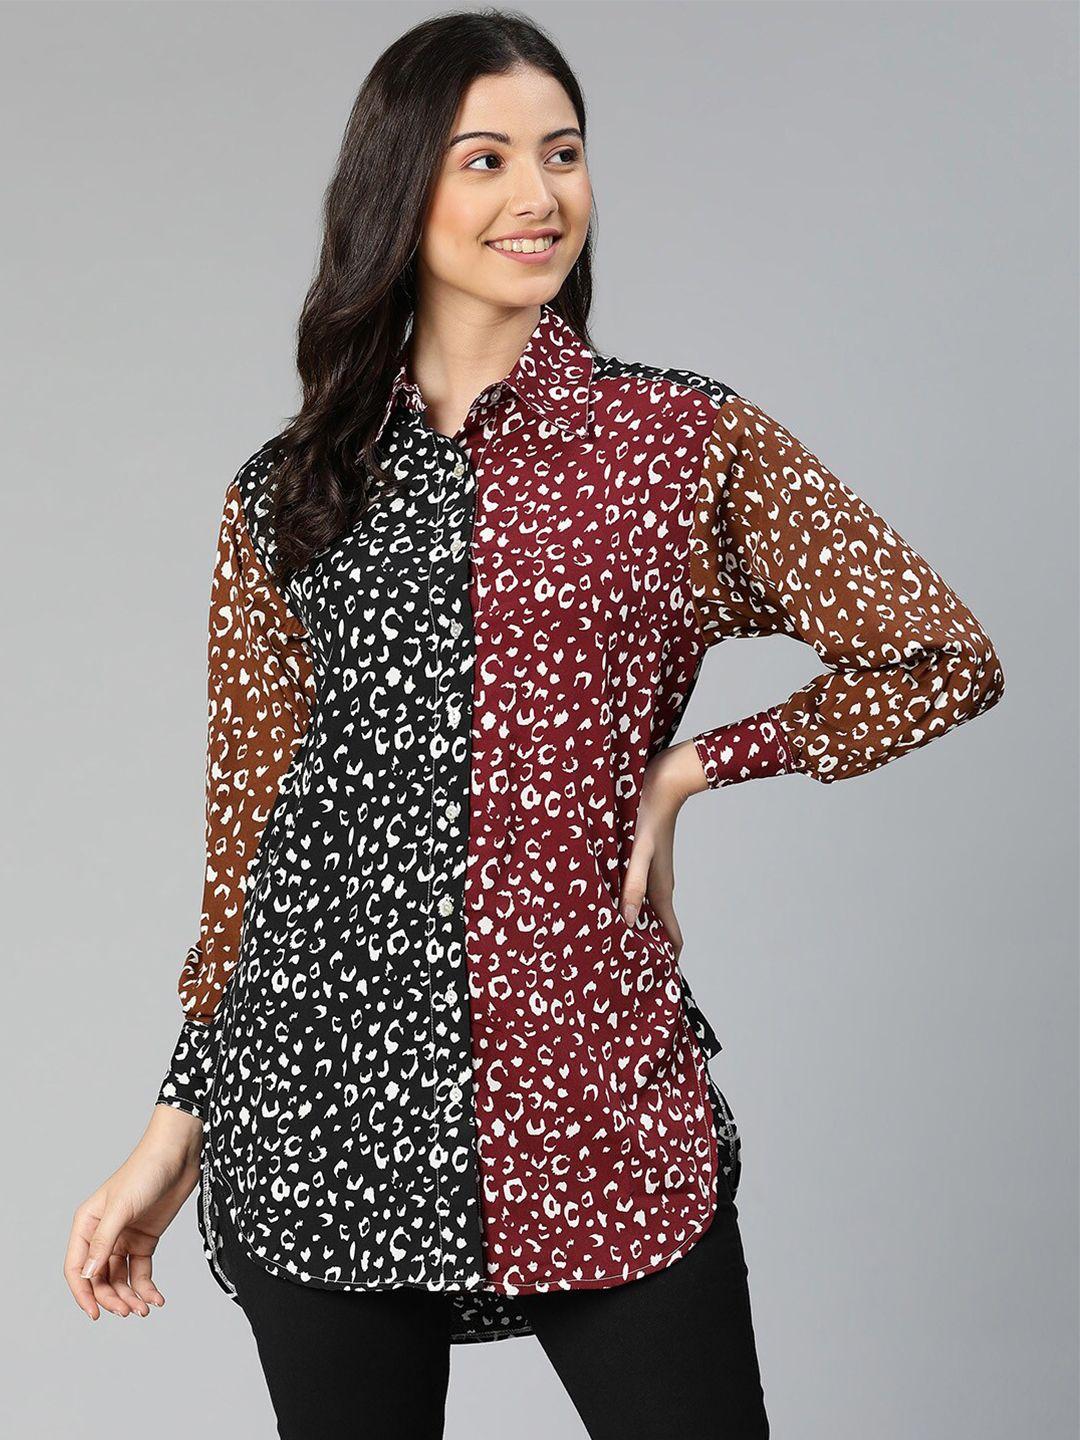 oxolloxo women maroon standard animal printed casual shirt